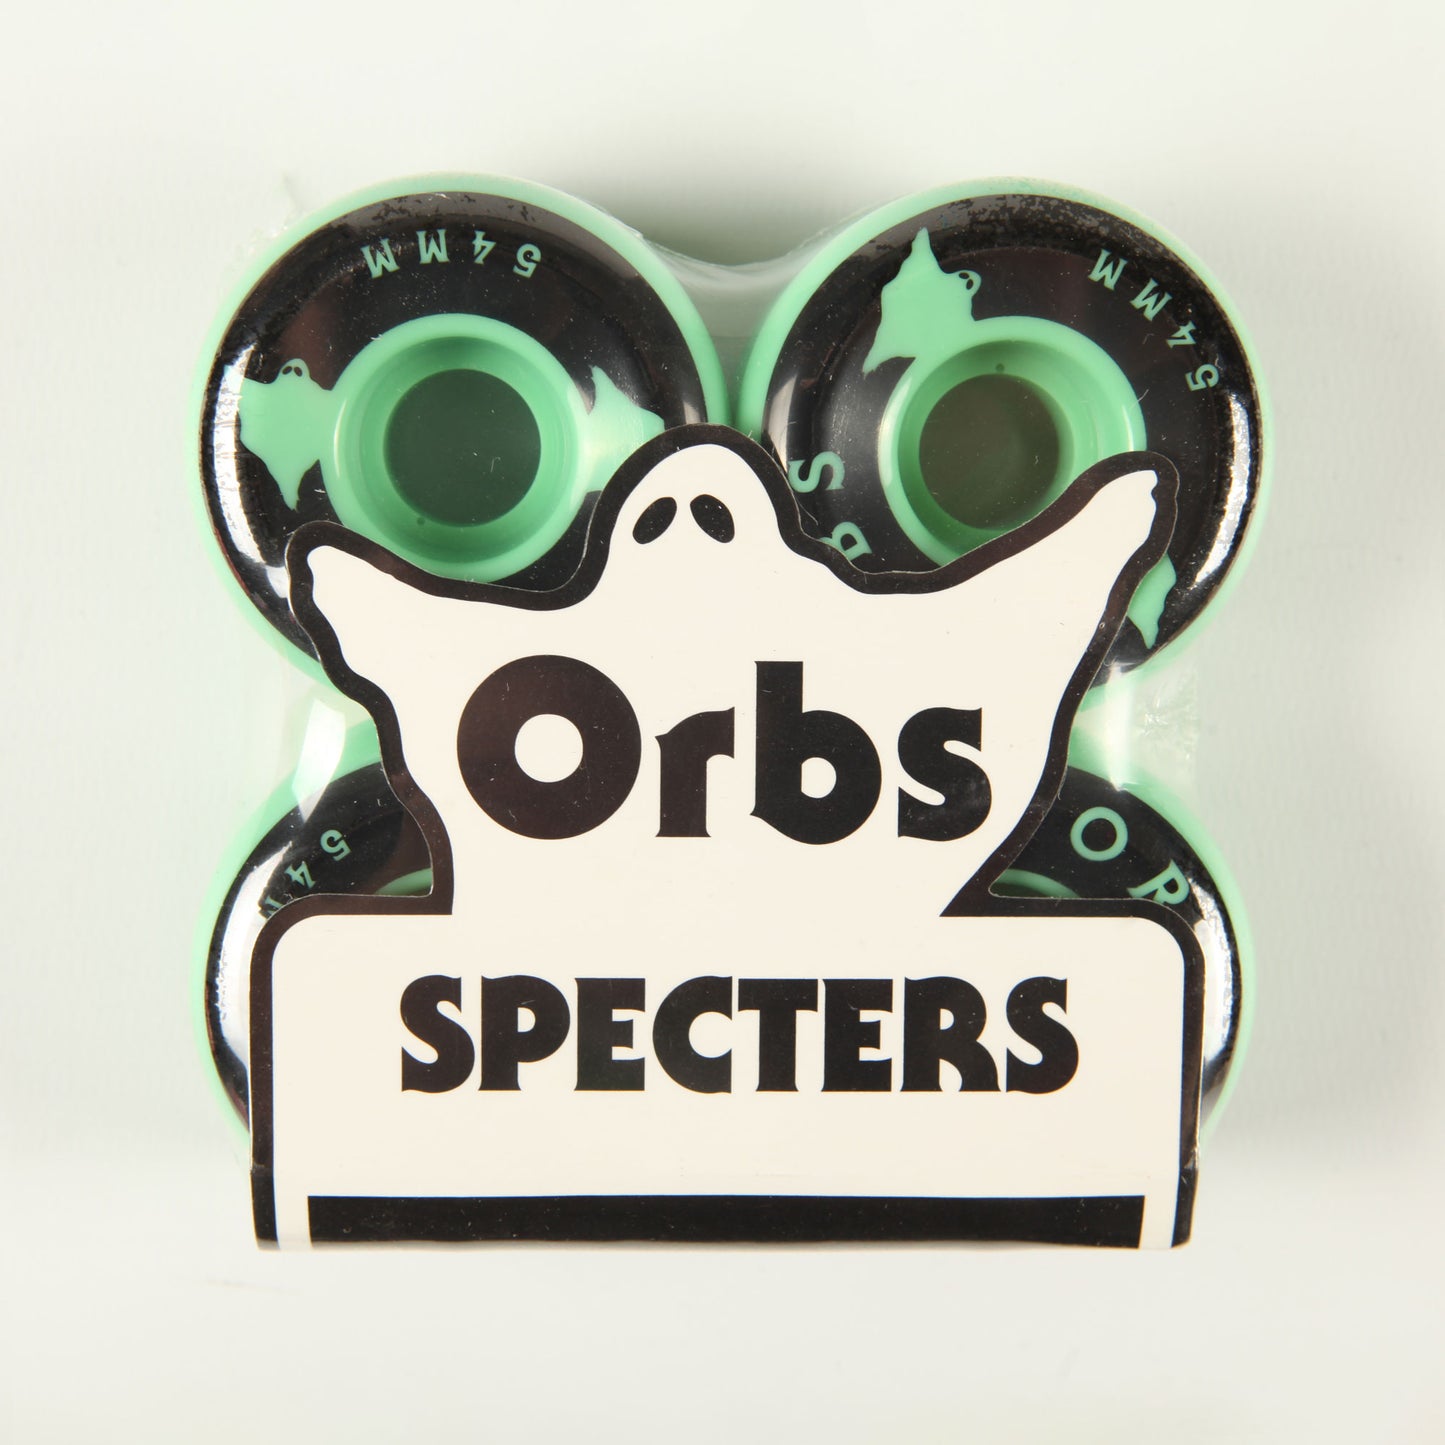 Orbs 'Specters Solids' 54mm 99A Wheels (Mint)